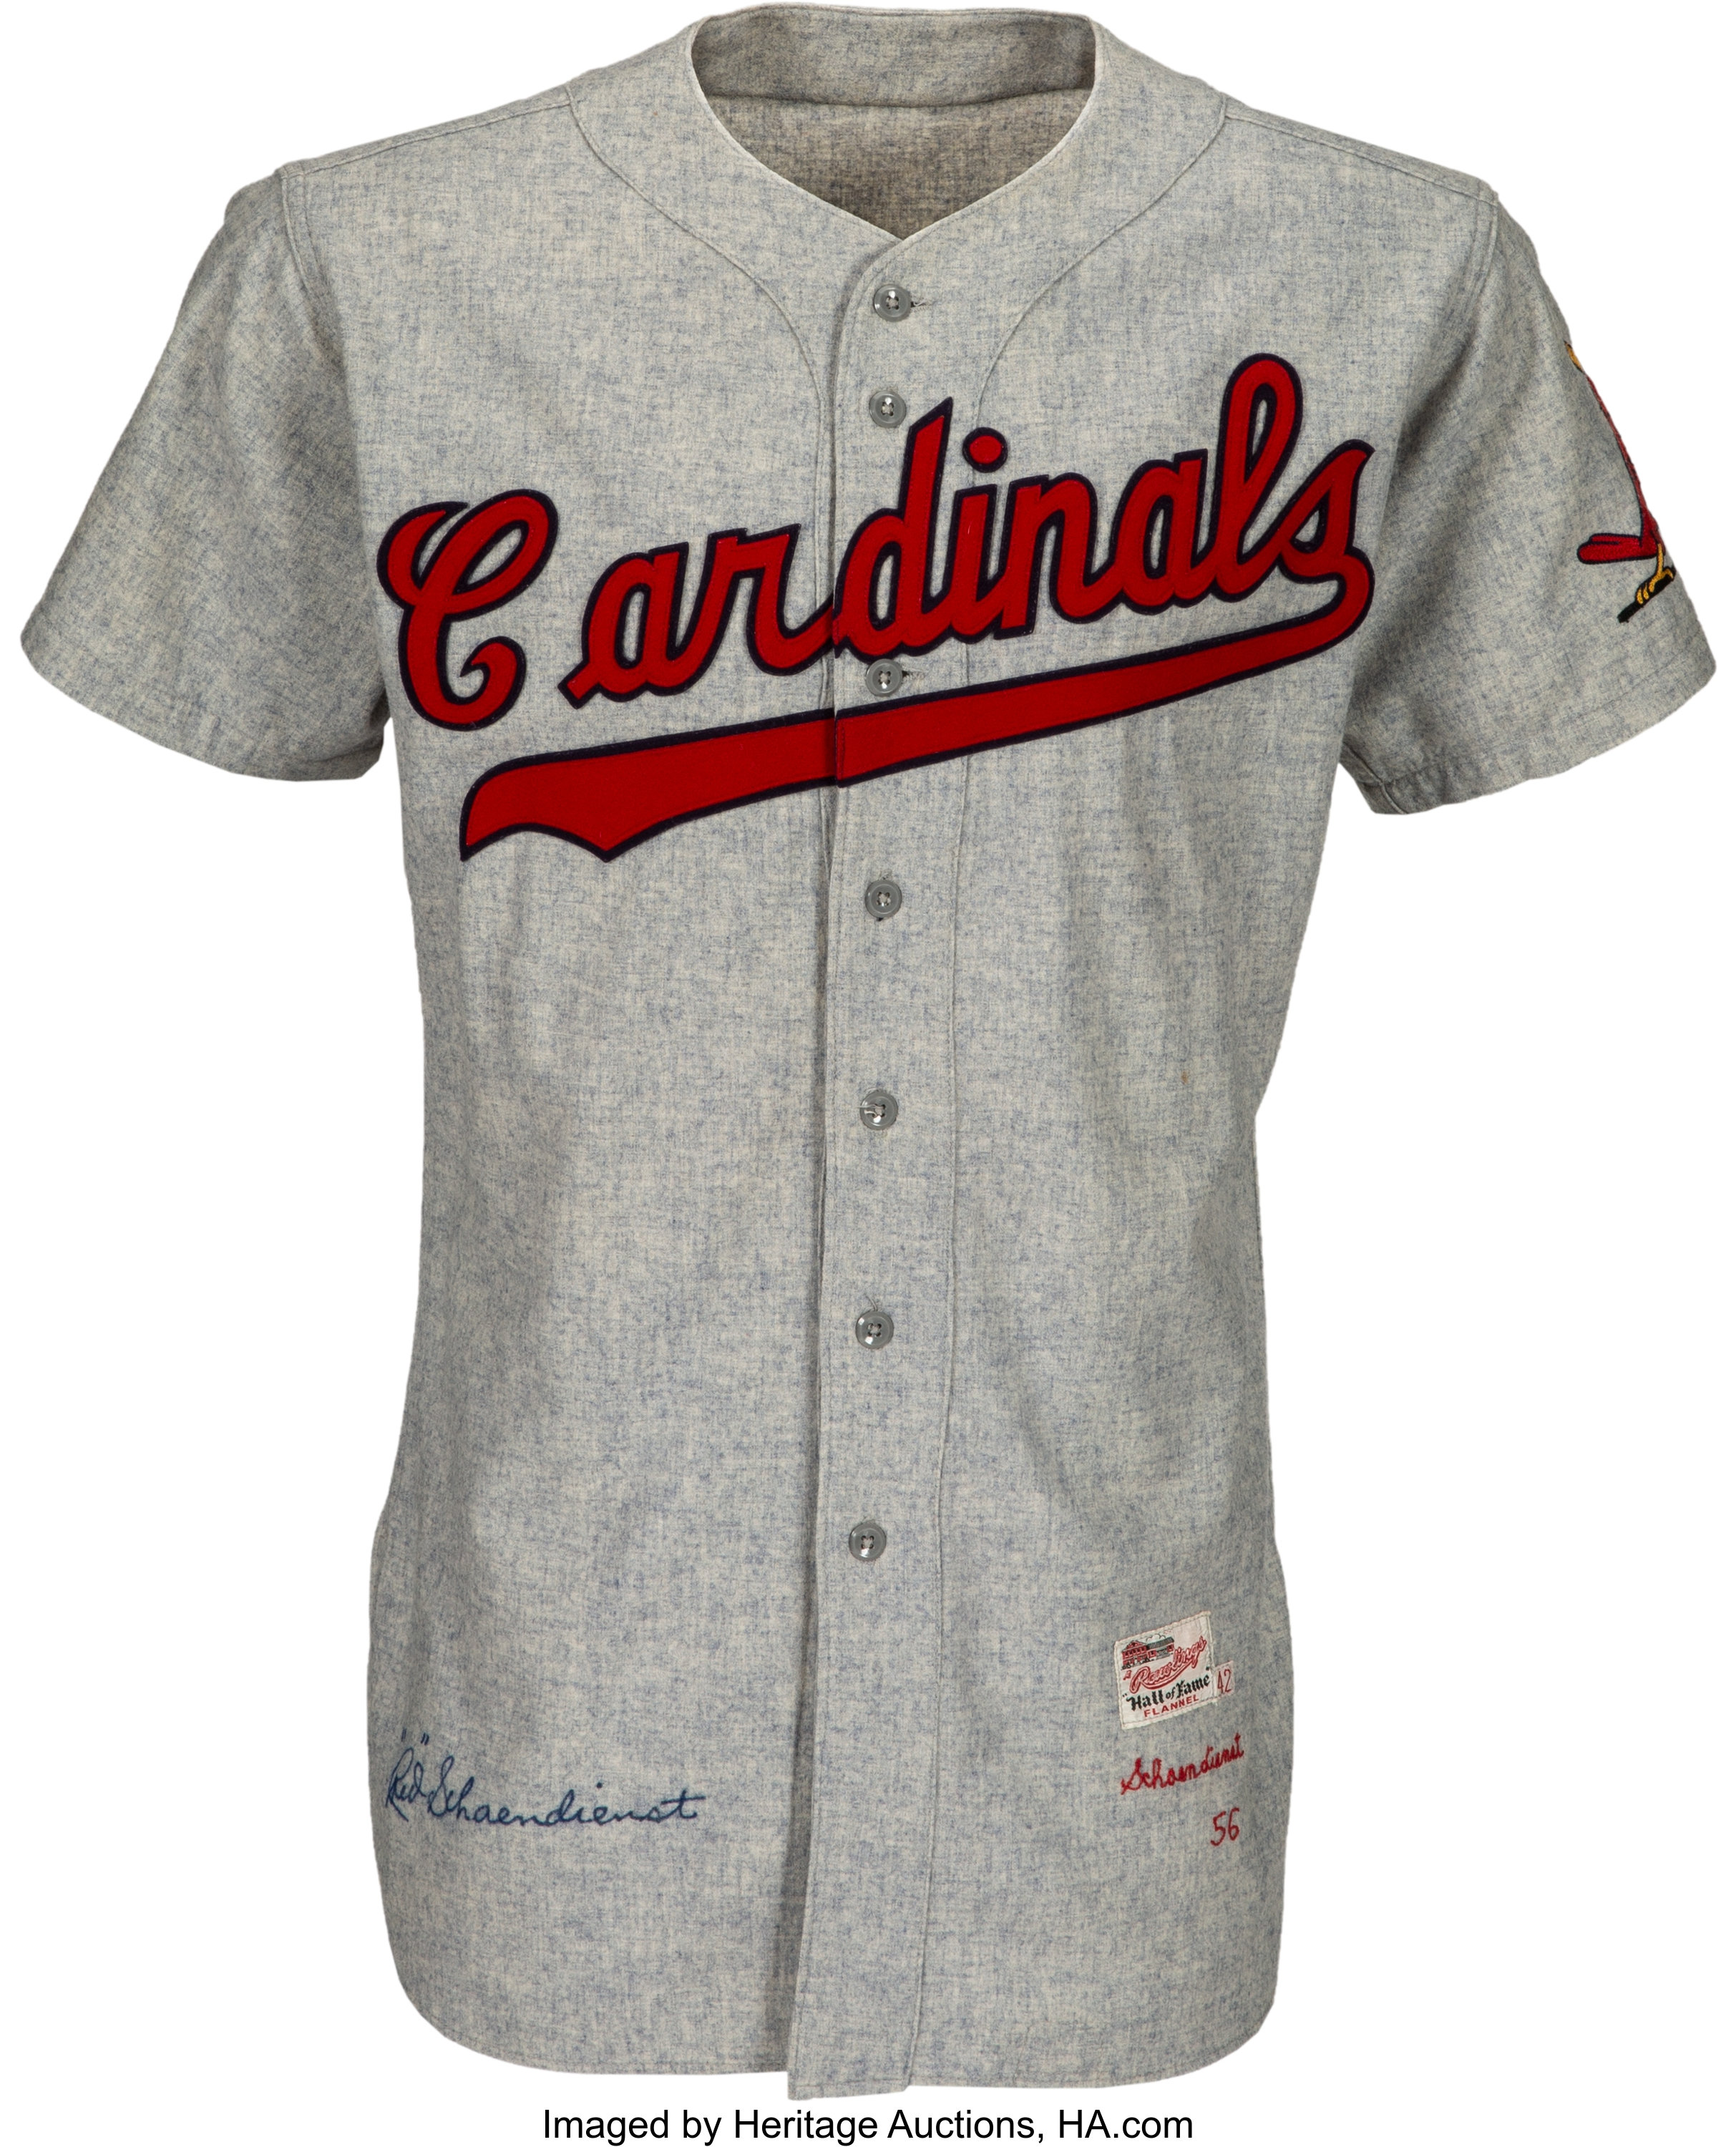 1957 St. Louis Cardinals Game Worn Jersey. Baseball